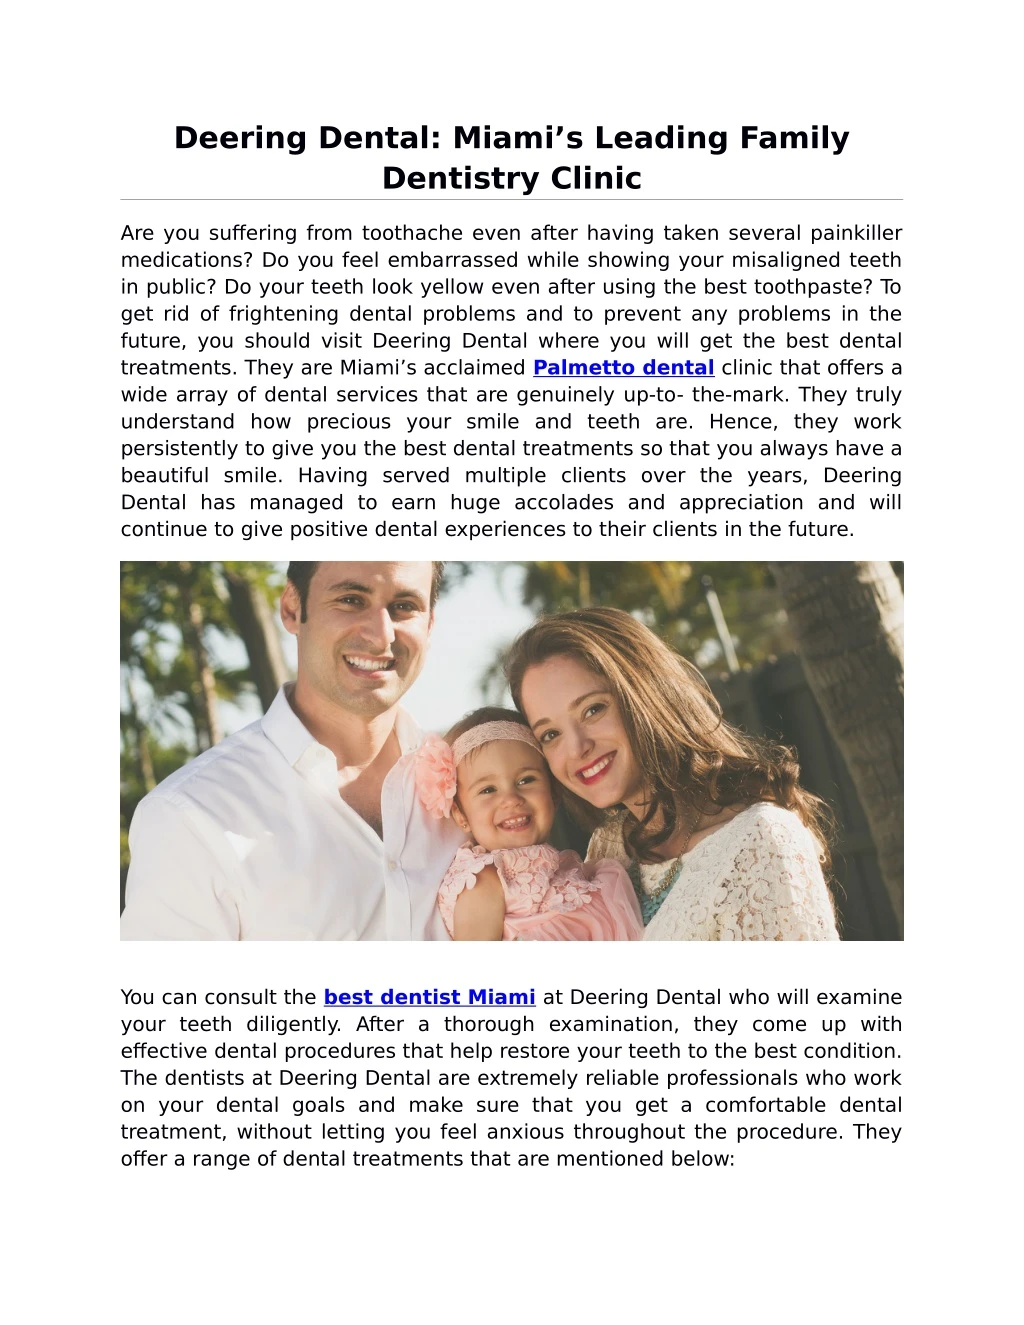 deering dental miami s leading family dentistry